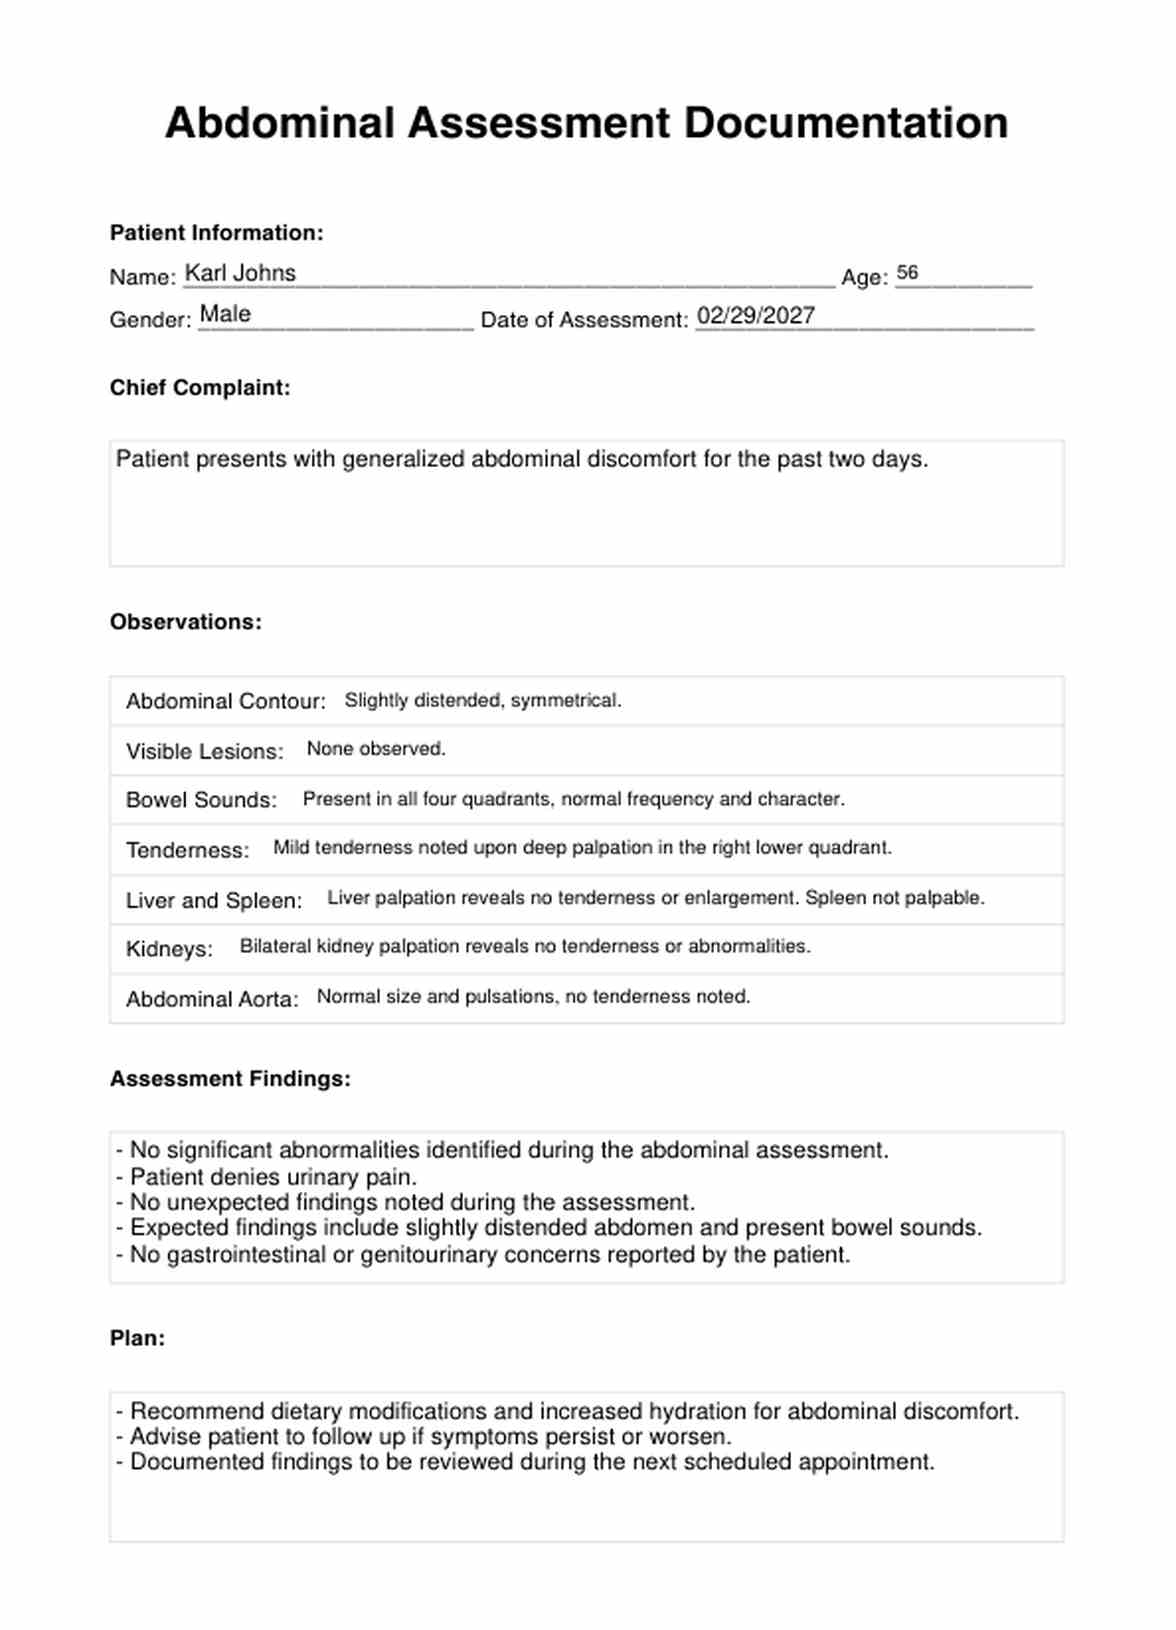 Abdominal Assessment Documentation PDF Example